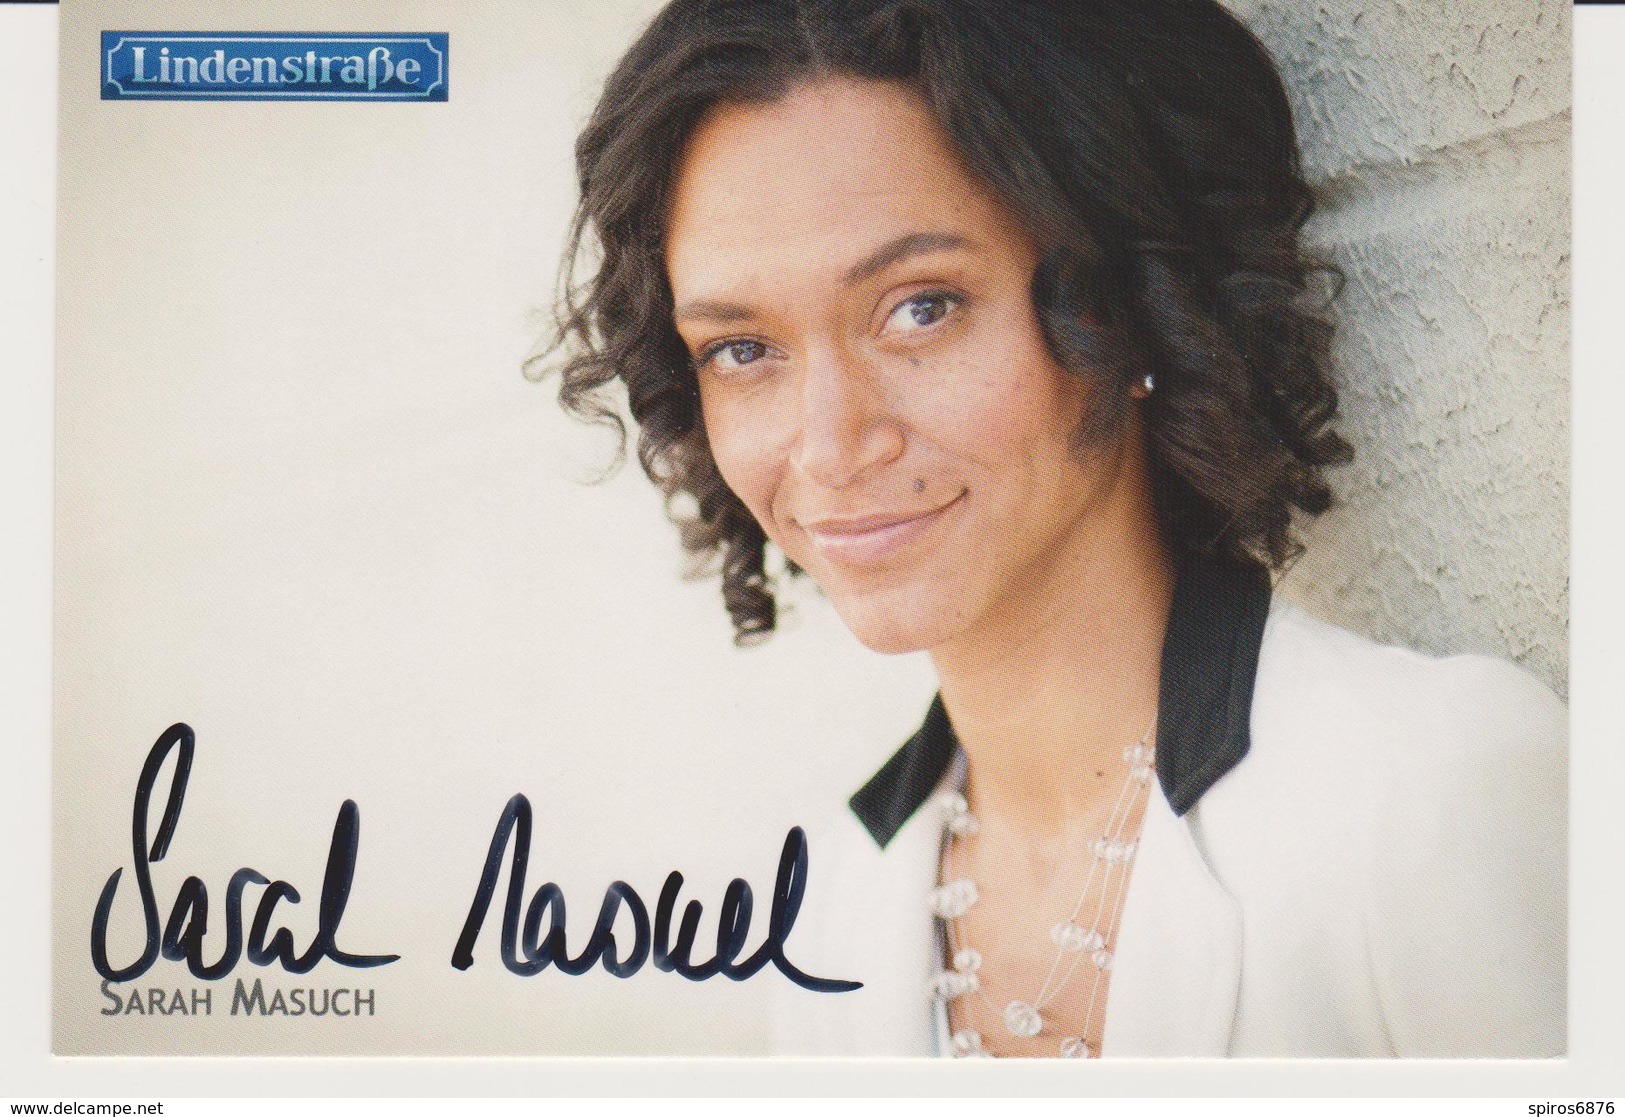 Authentic Signed Card / Autograph -  Actress SARAH MASUCH - German TV Series Lindenstrasse - Handtekening